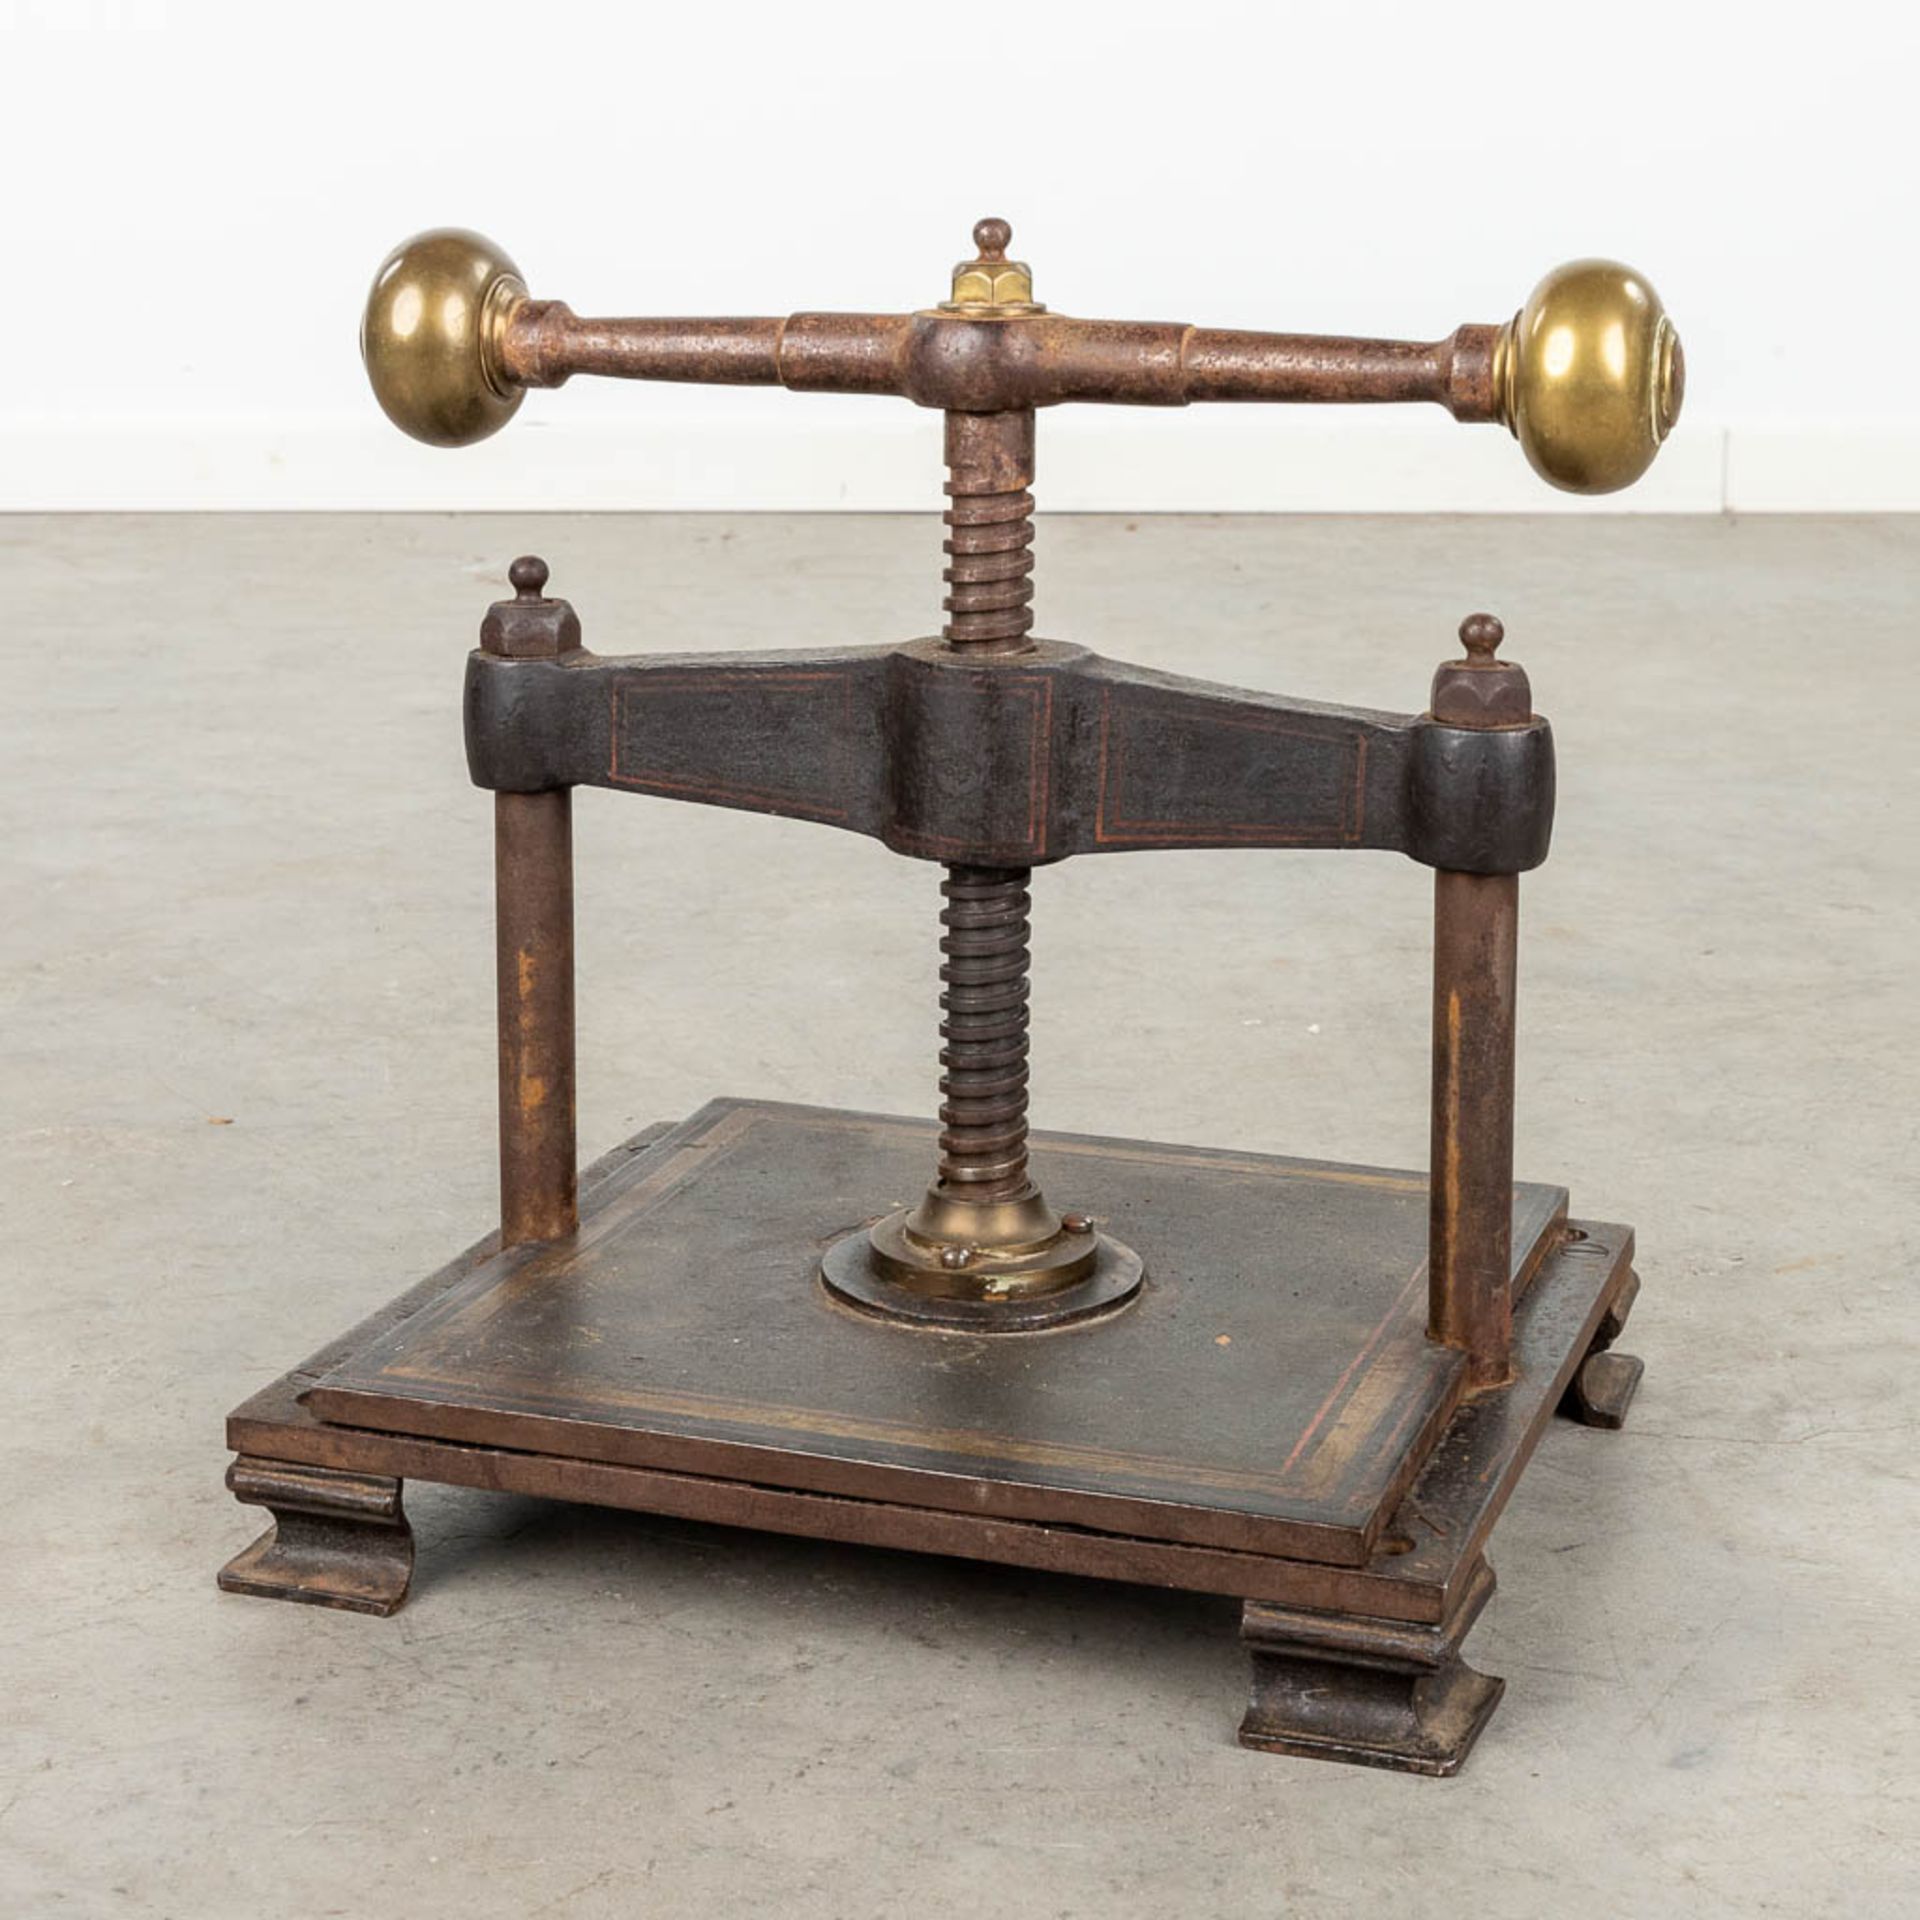 An antique book press, made of metal. (L:30 x W:38 x H:36 cm)